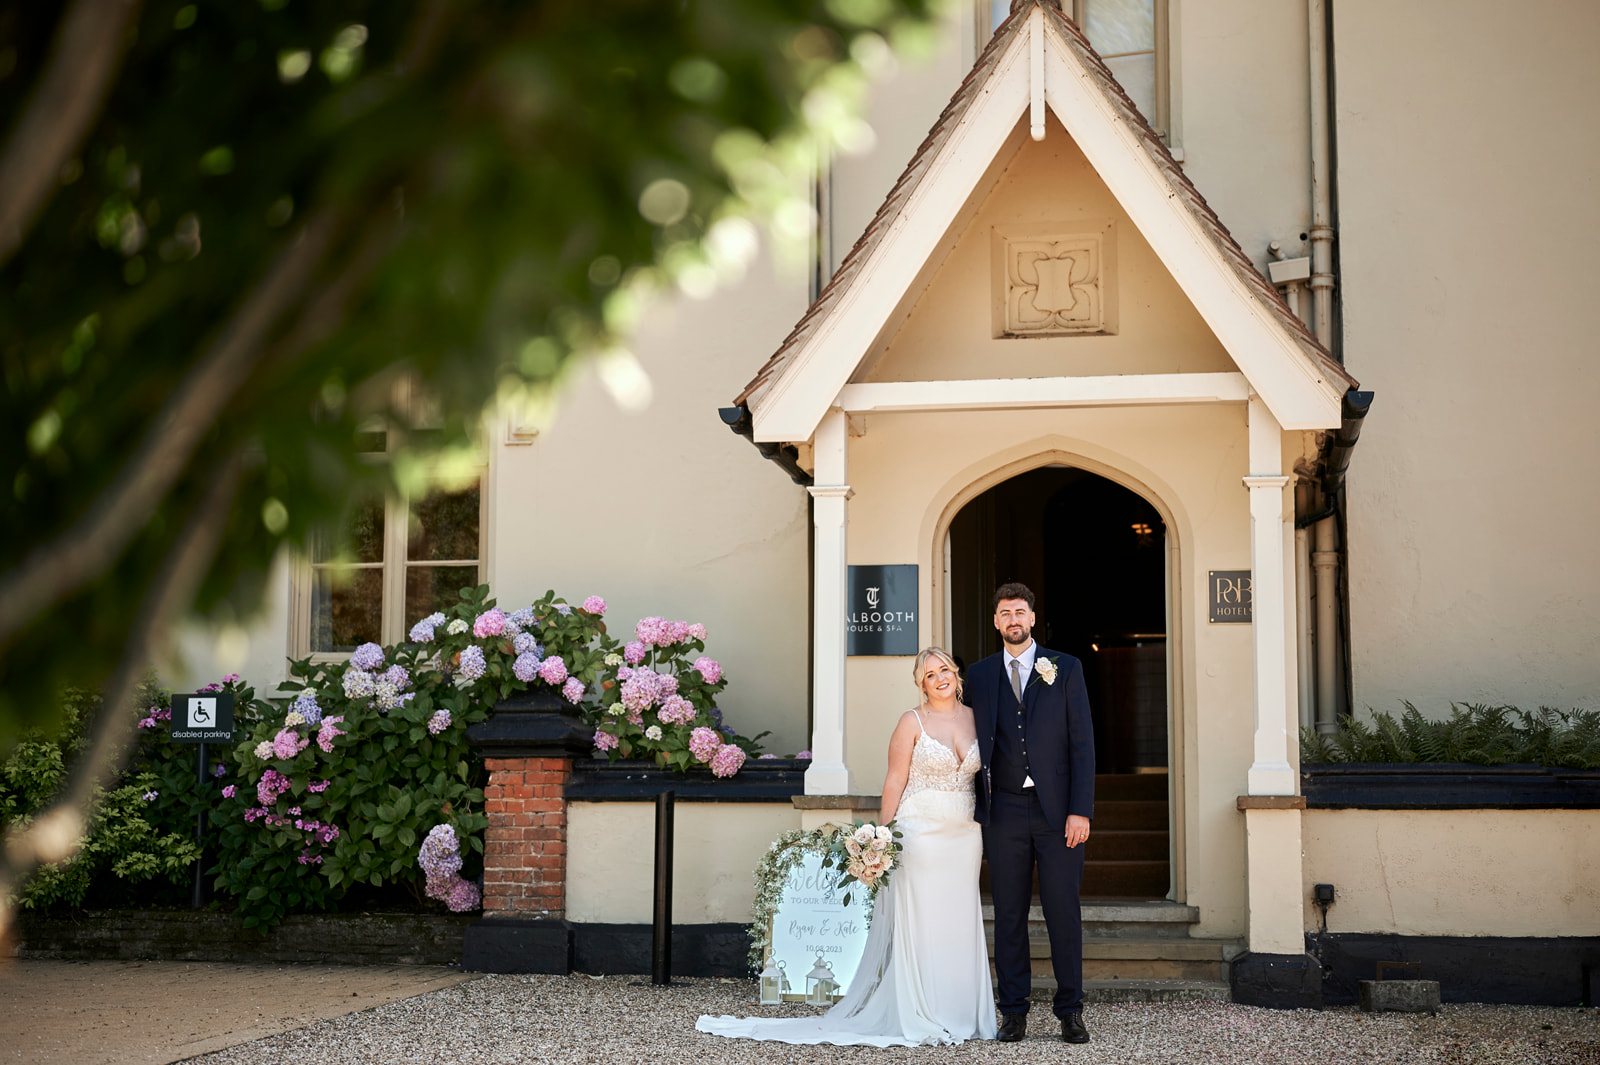 Talbooth House & Spa Wedding - Rachel Reeve Photography Couple